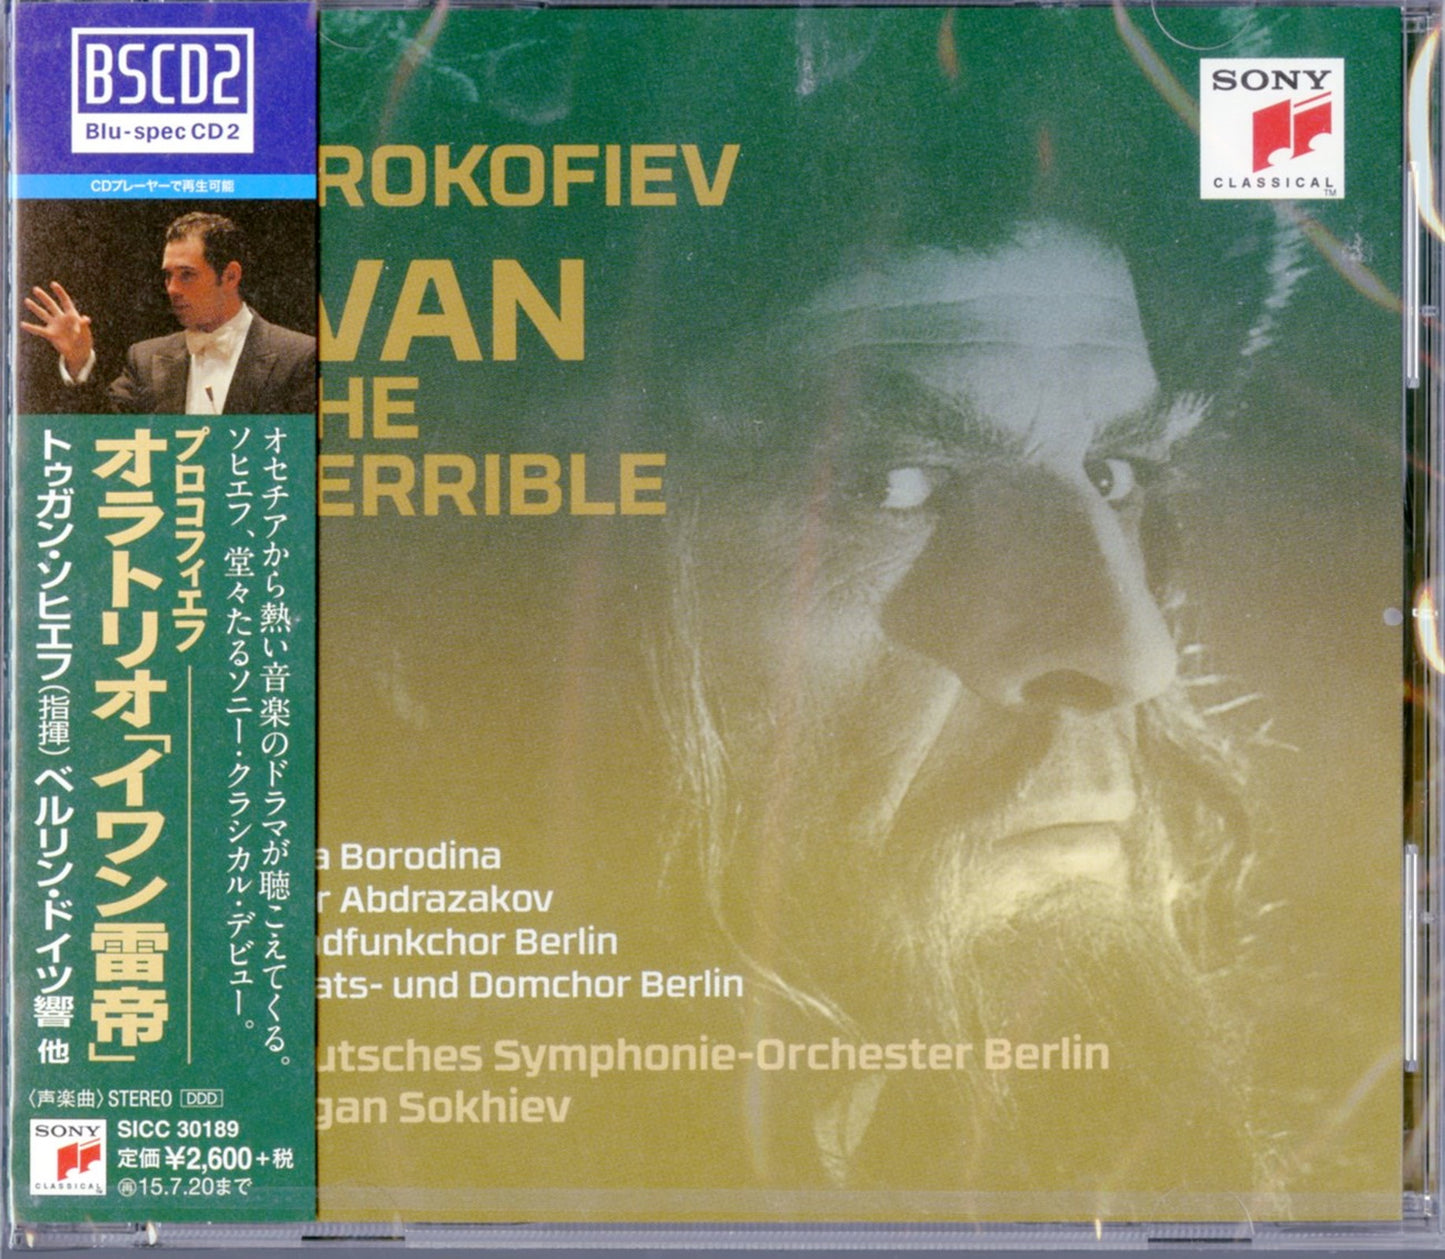 Tugan Sokhiev - Prokofiev: Ivan The Terrible - Japan  Blu-spec CD2